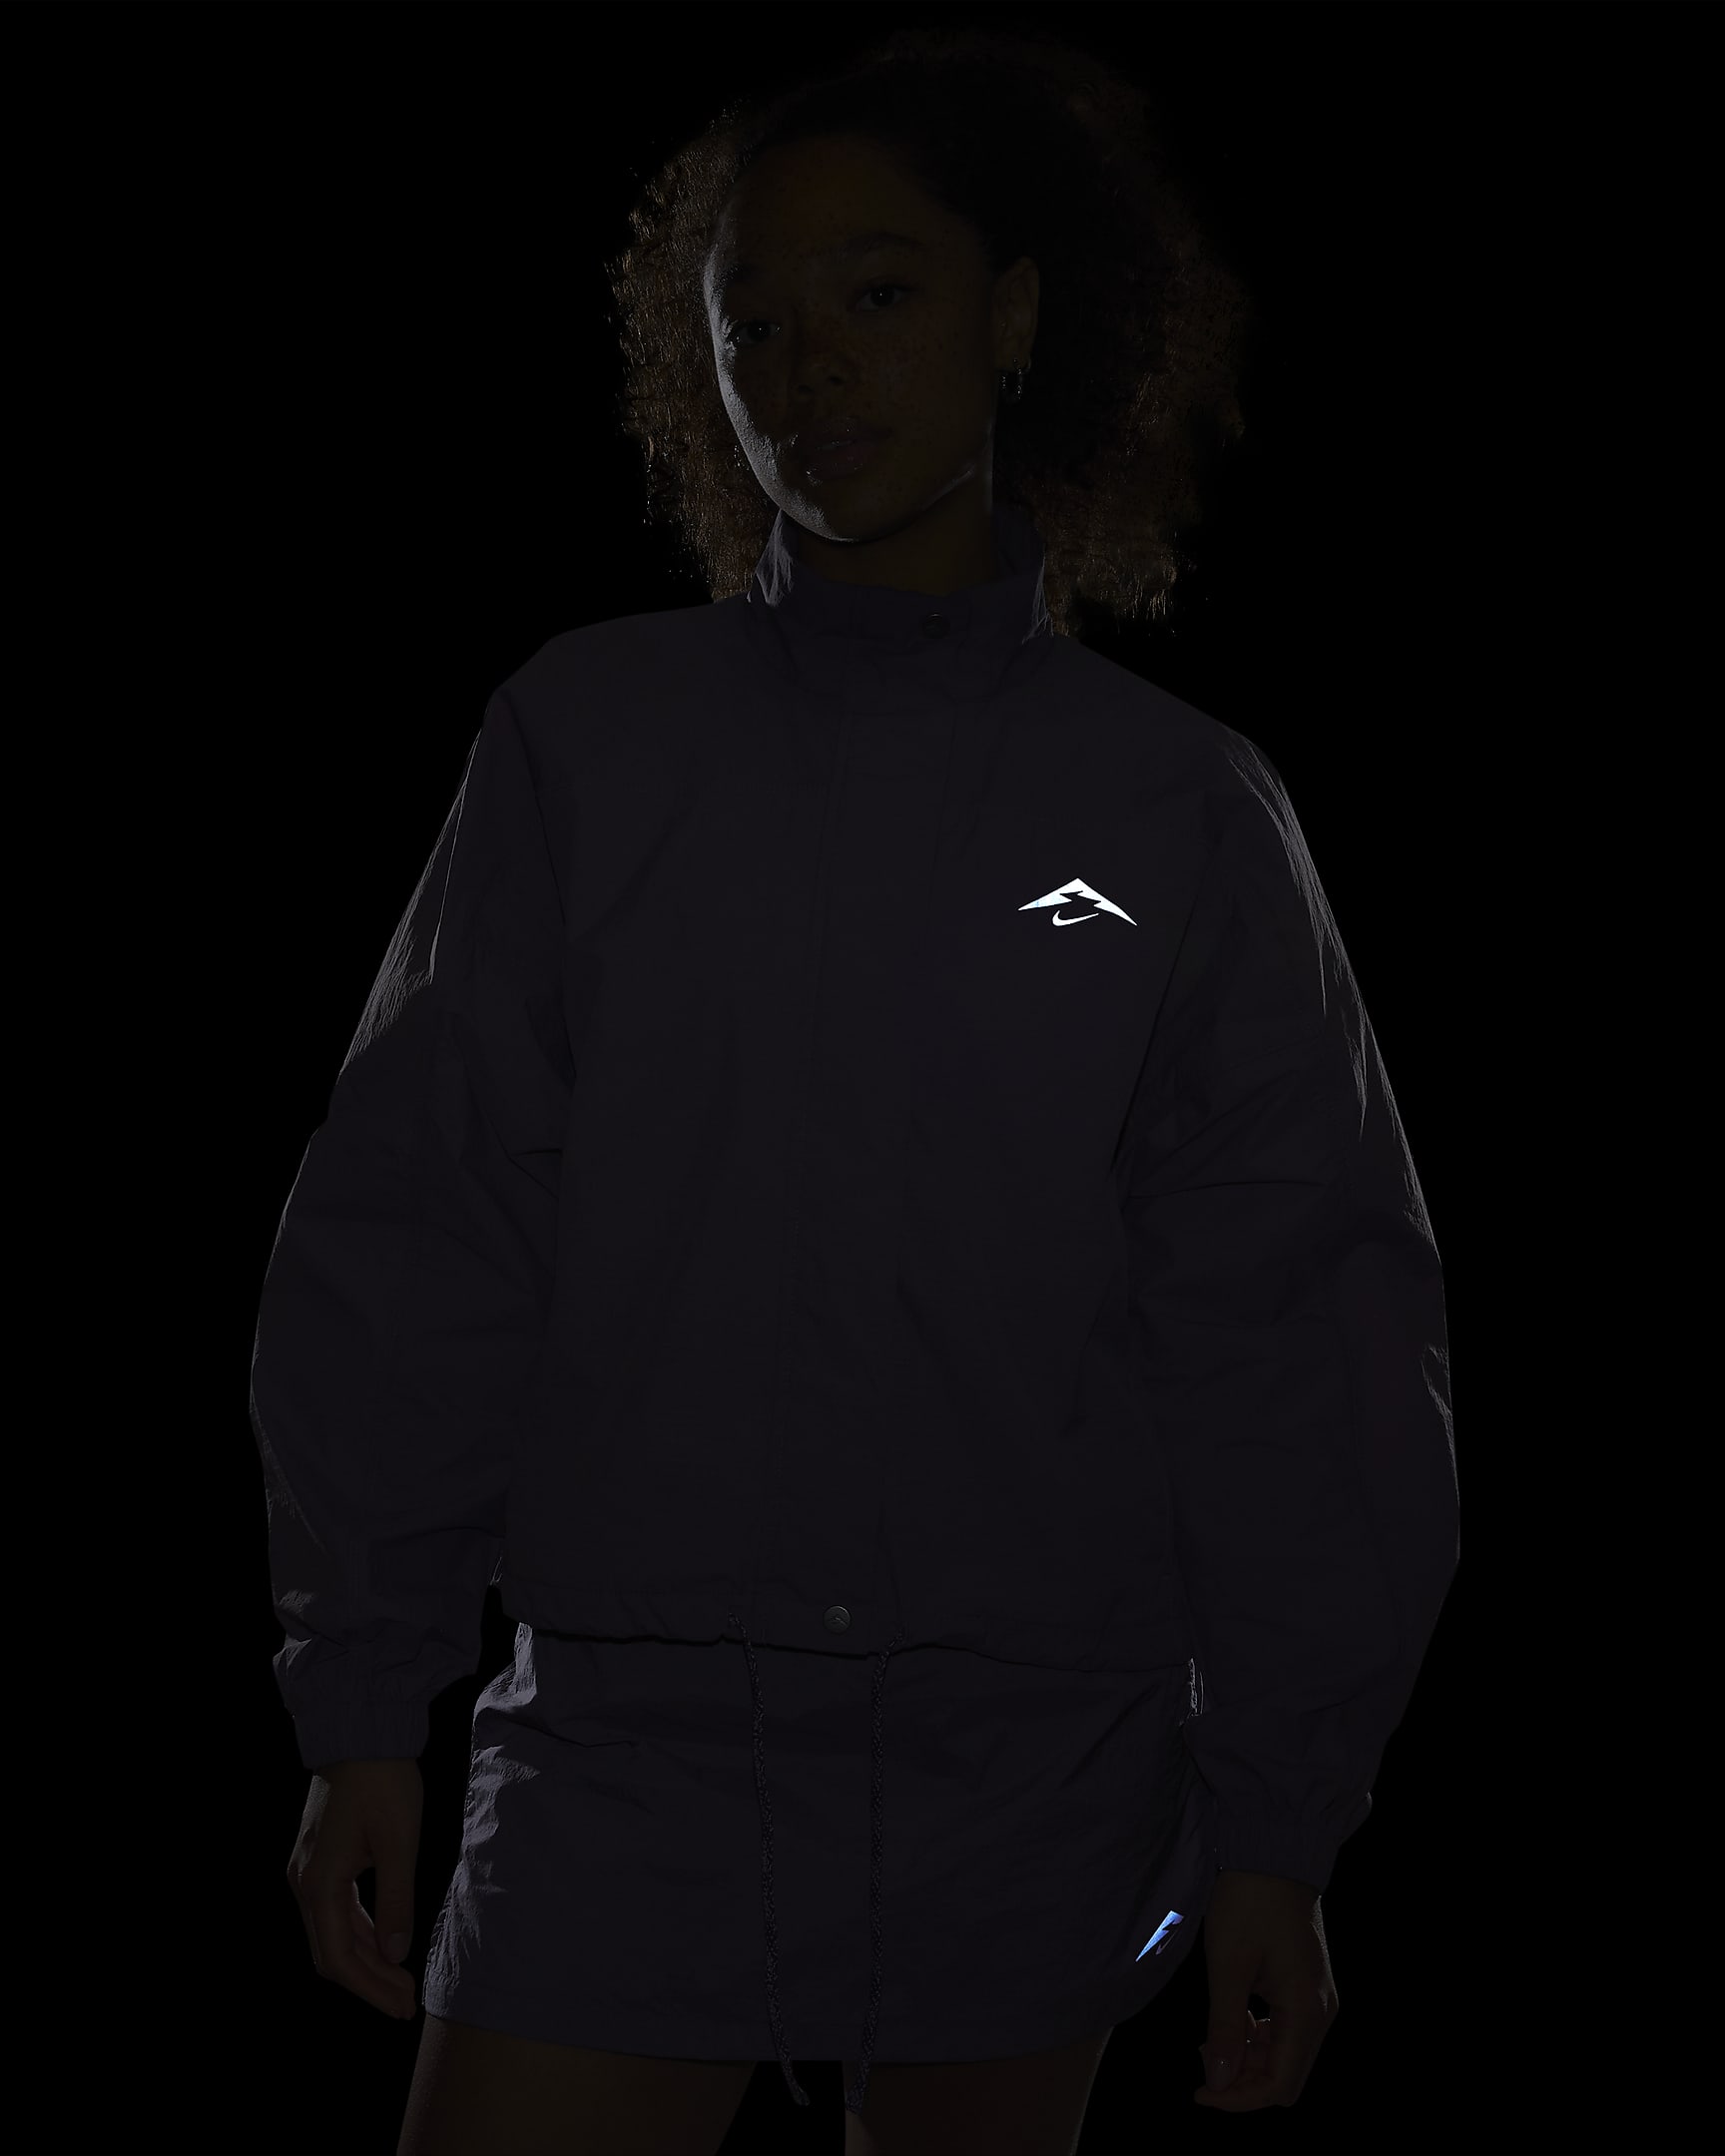 Nike Trail Women's Repel UV Running Jacket - Daybreak/Court Purple